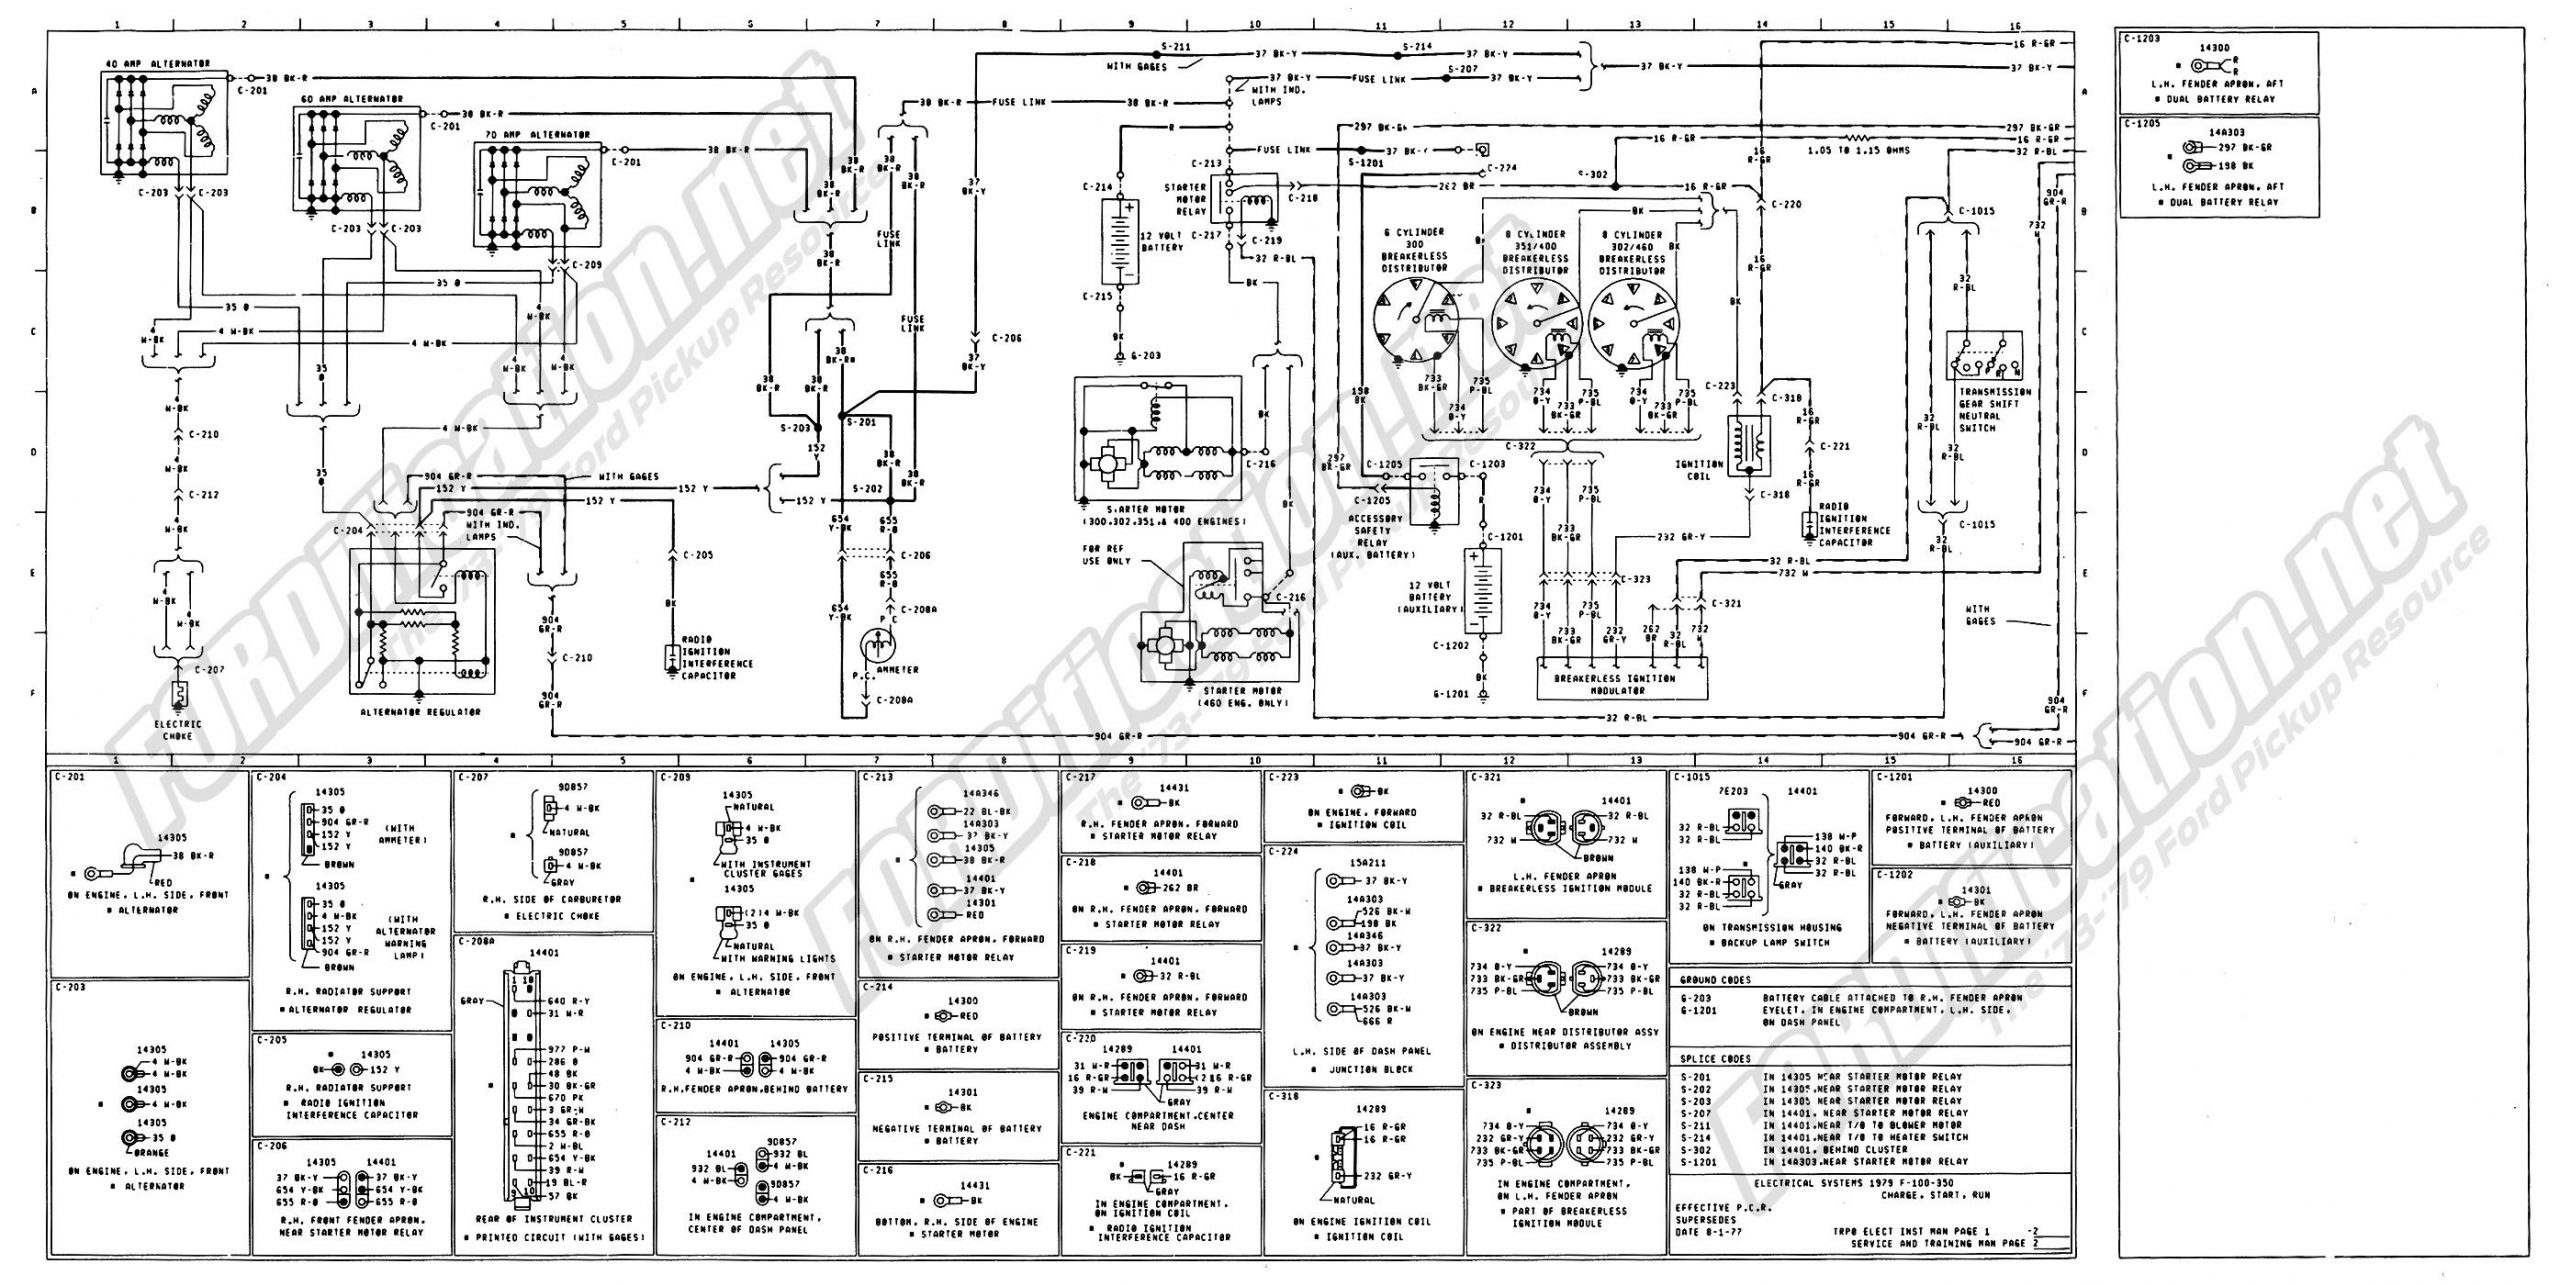 1995 ford F-150 Radio Wiring Diagram 1973-1979 ford Truck Wiring Diagrams & Schematics – fordification.net Of 1995 ford F-150 Radio Wiring Diagram